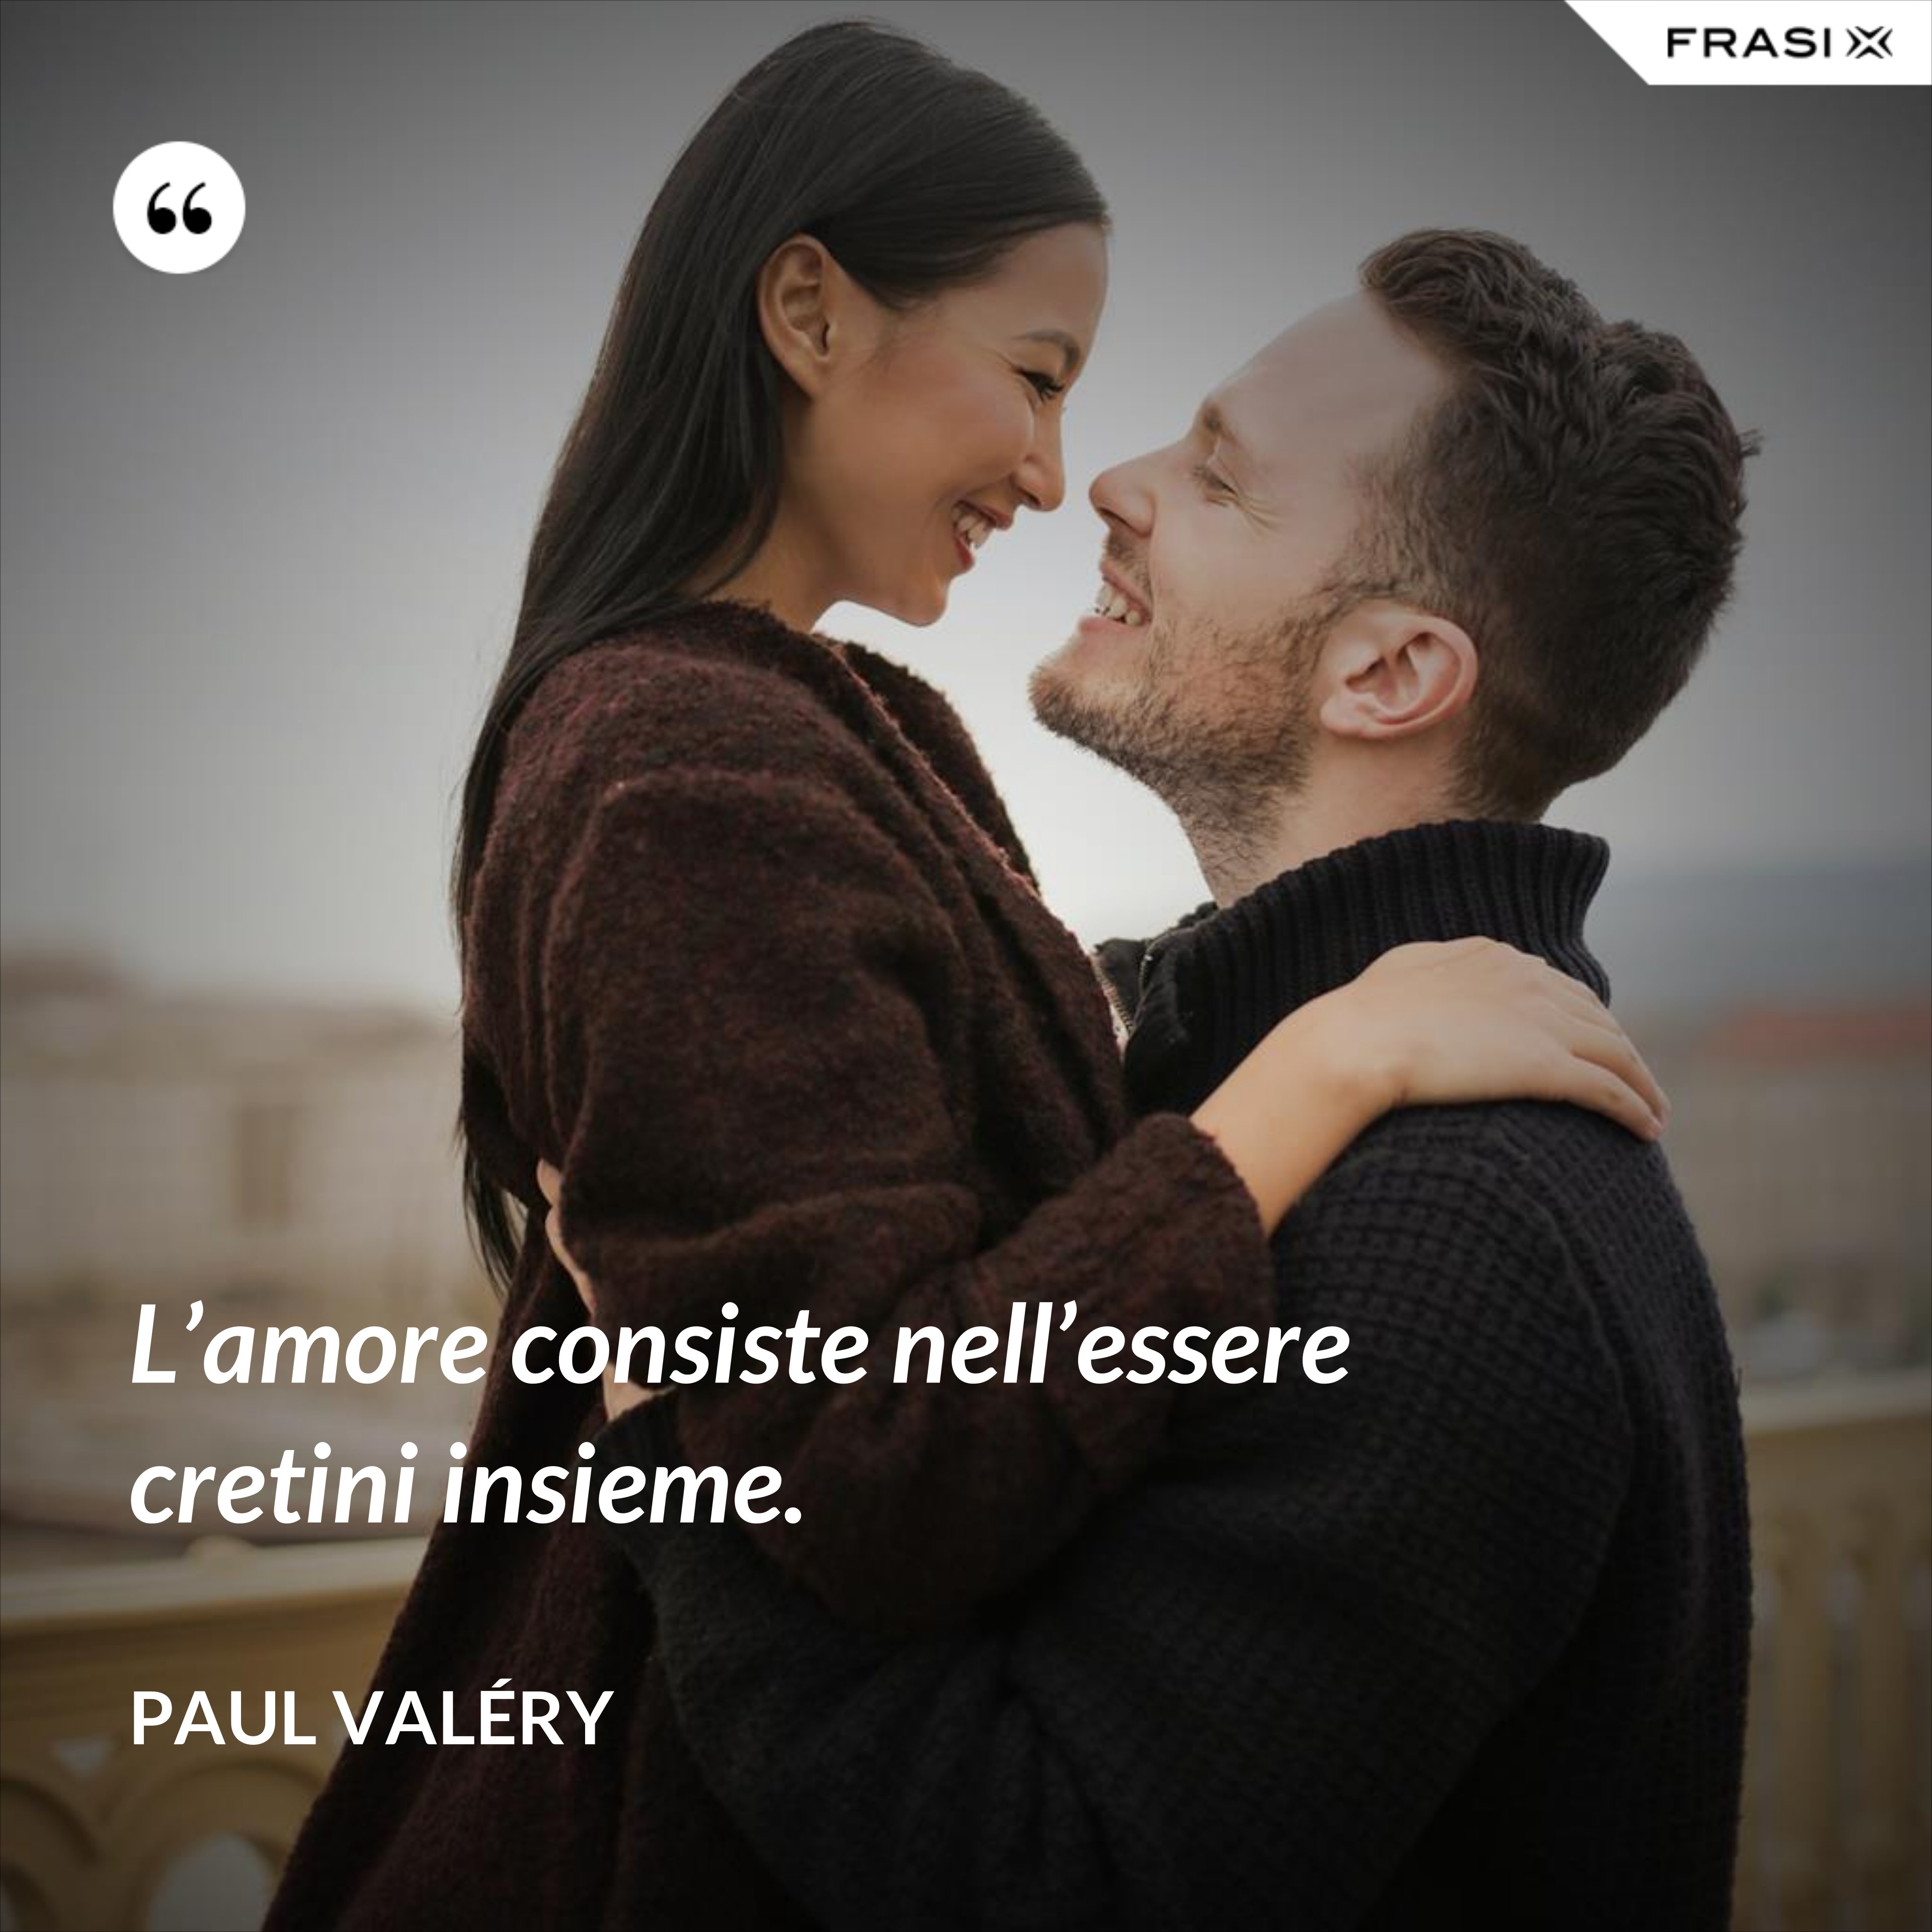 L’amore consiste nell’essere cretini insieme. - Paul Valéry